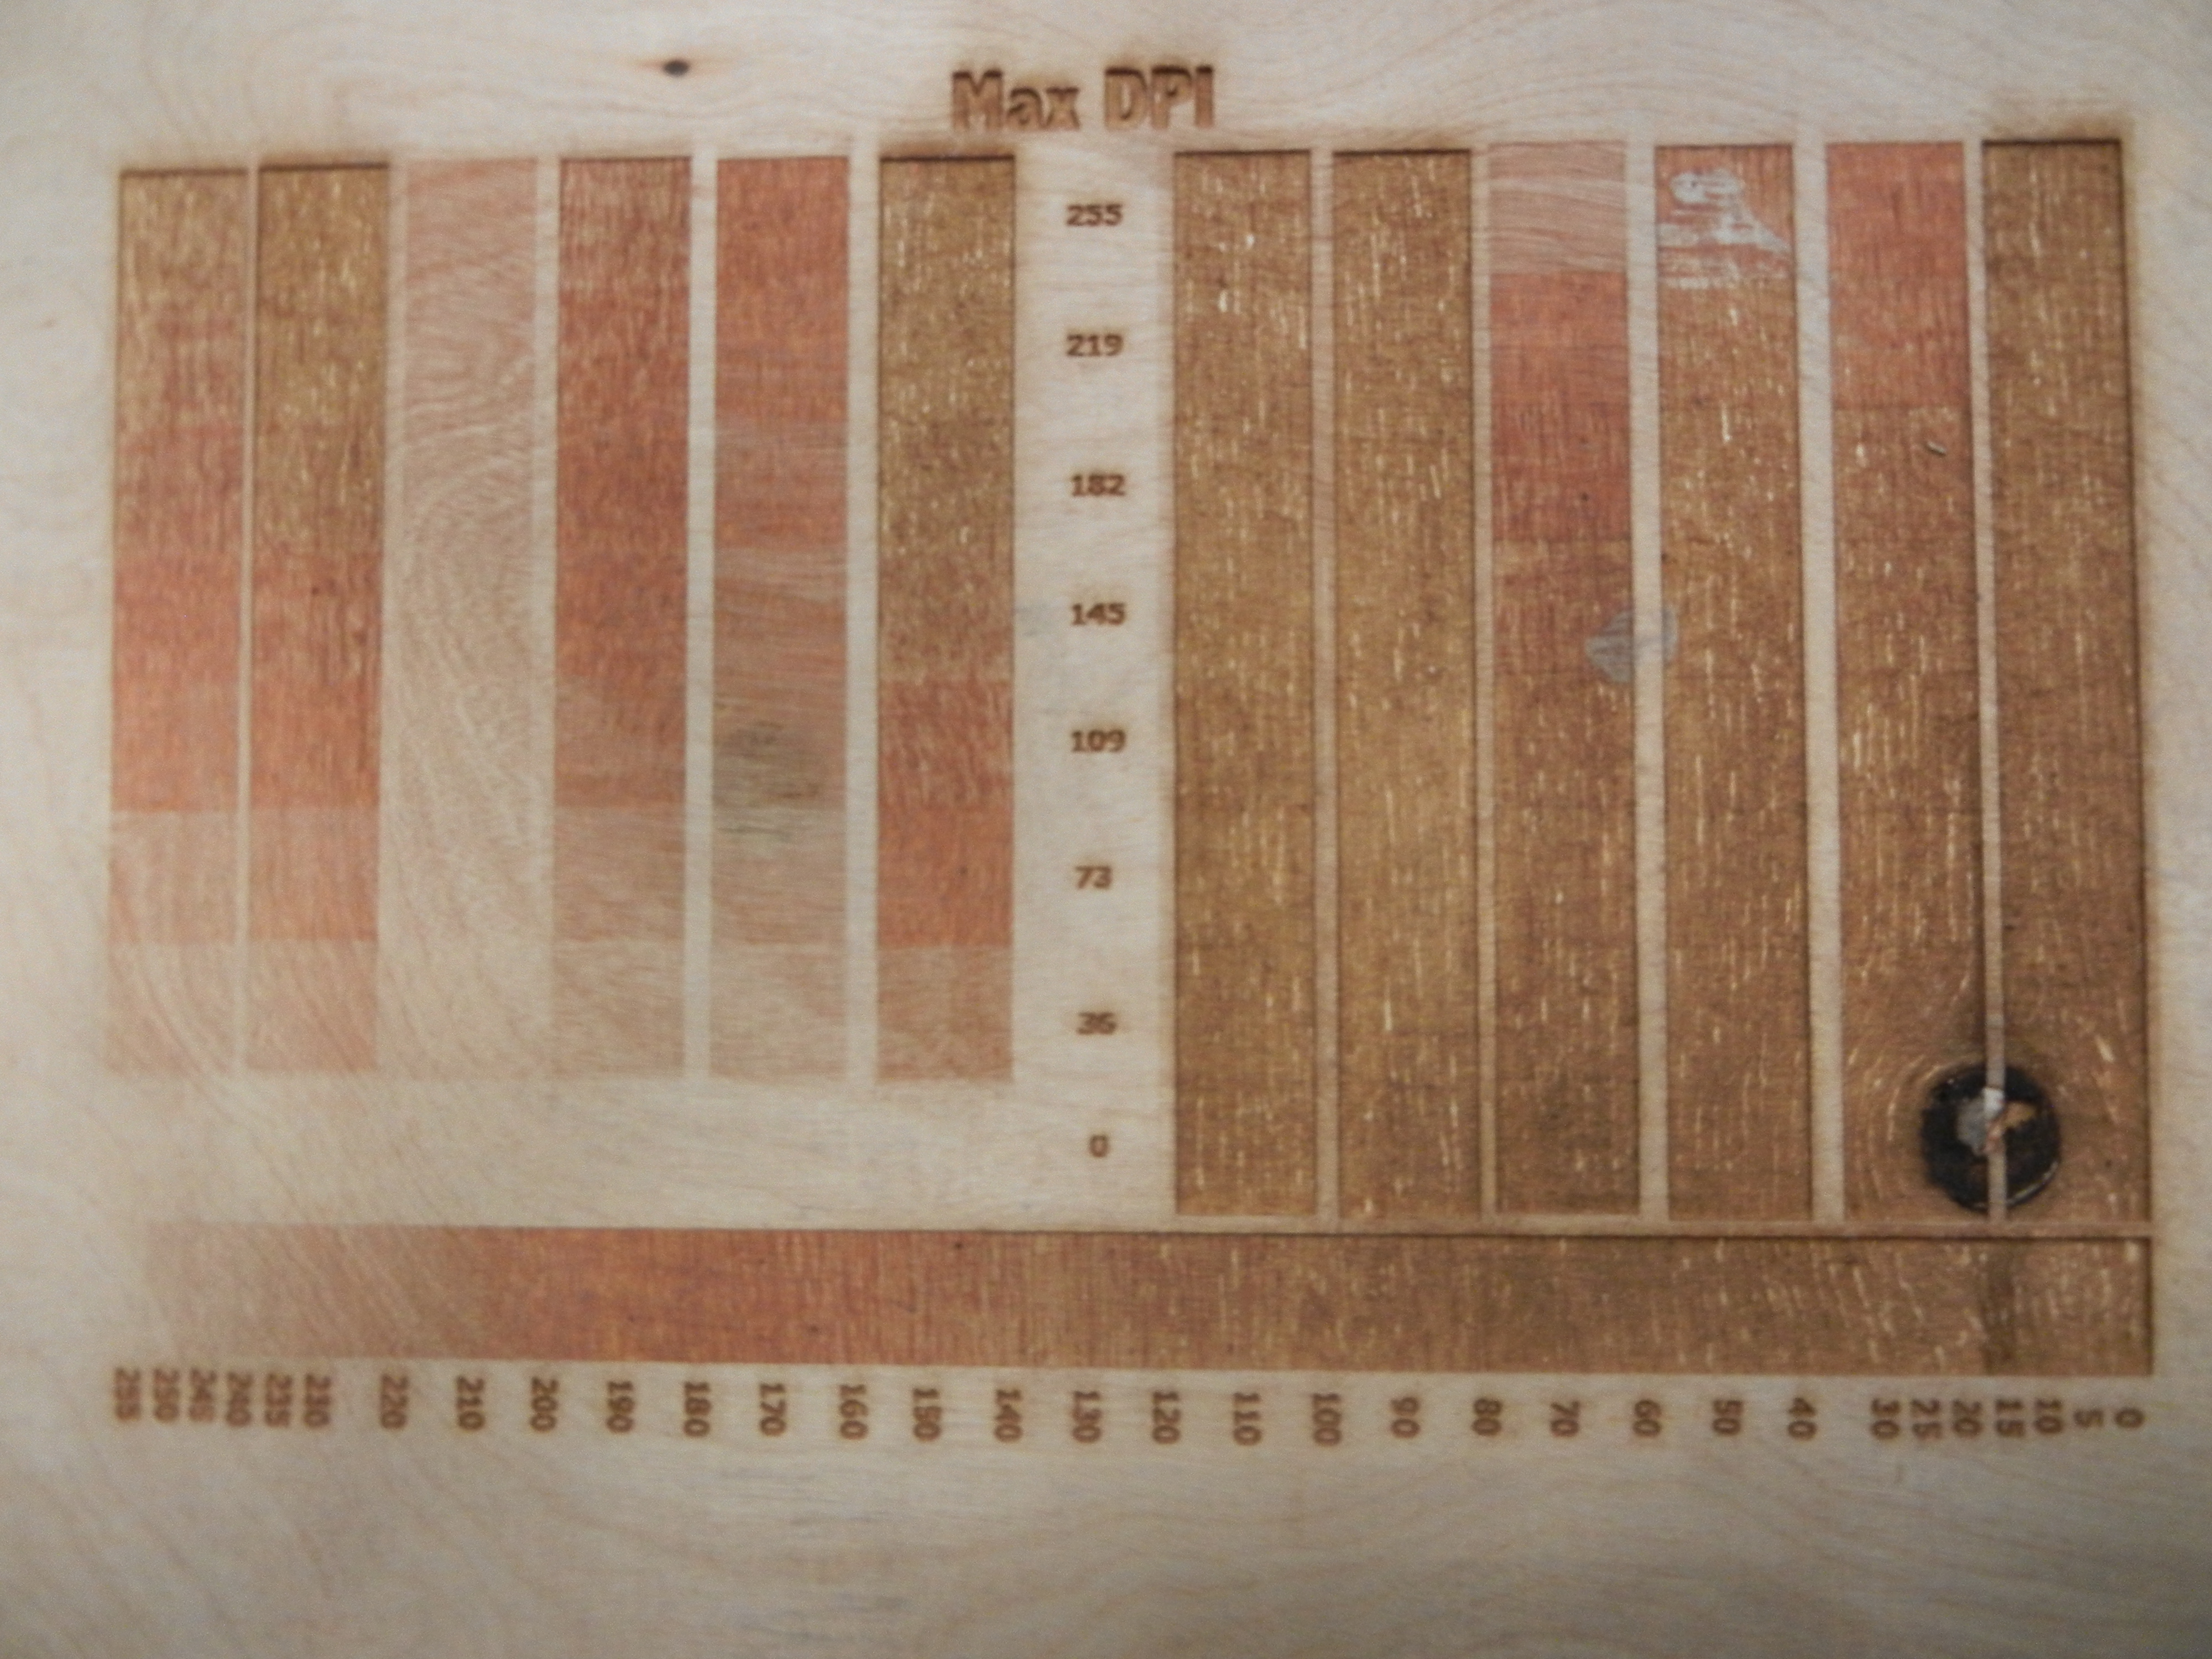 Example of engraved wood at maximum DPI